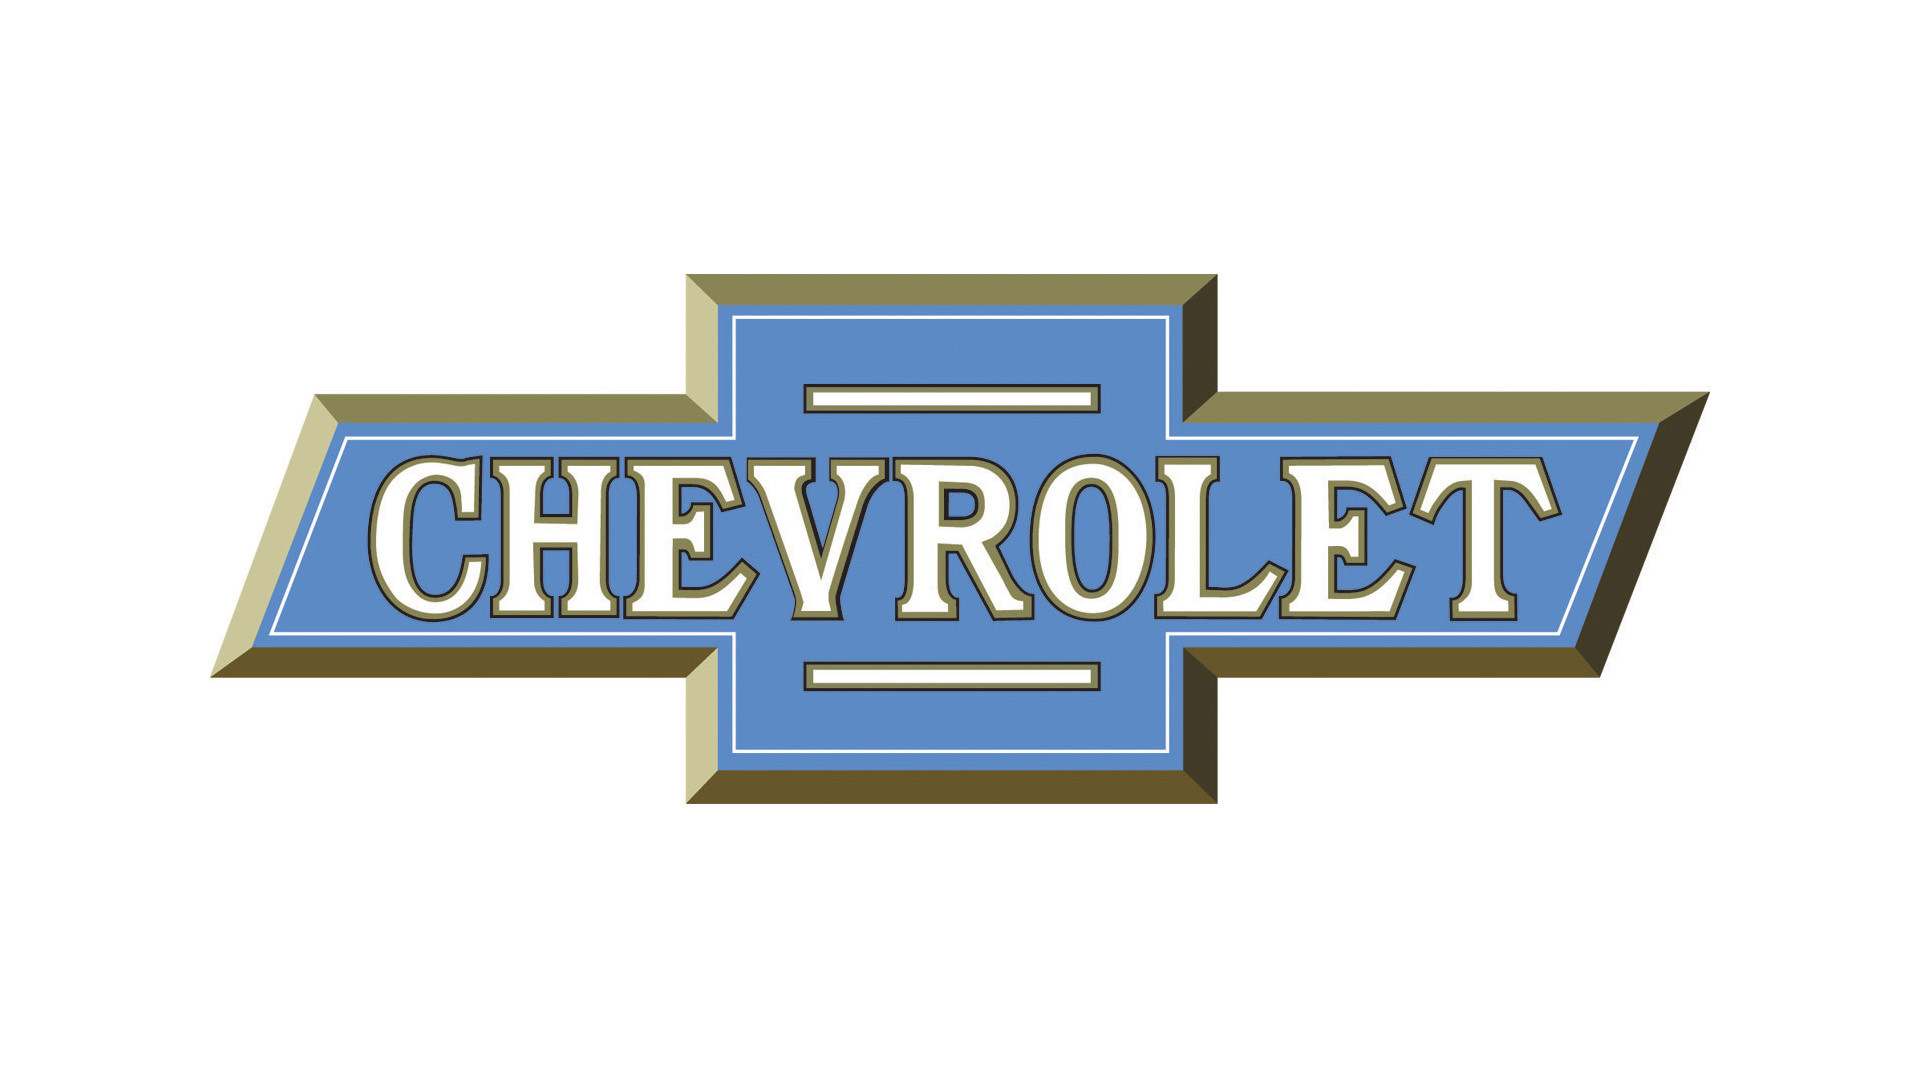 1920x1080 Mesmerizing Chevrolet Logo Images 54 In Best Fonts For Logos With Chevrolet  Logo Images